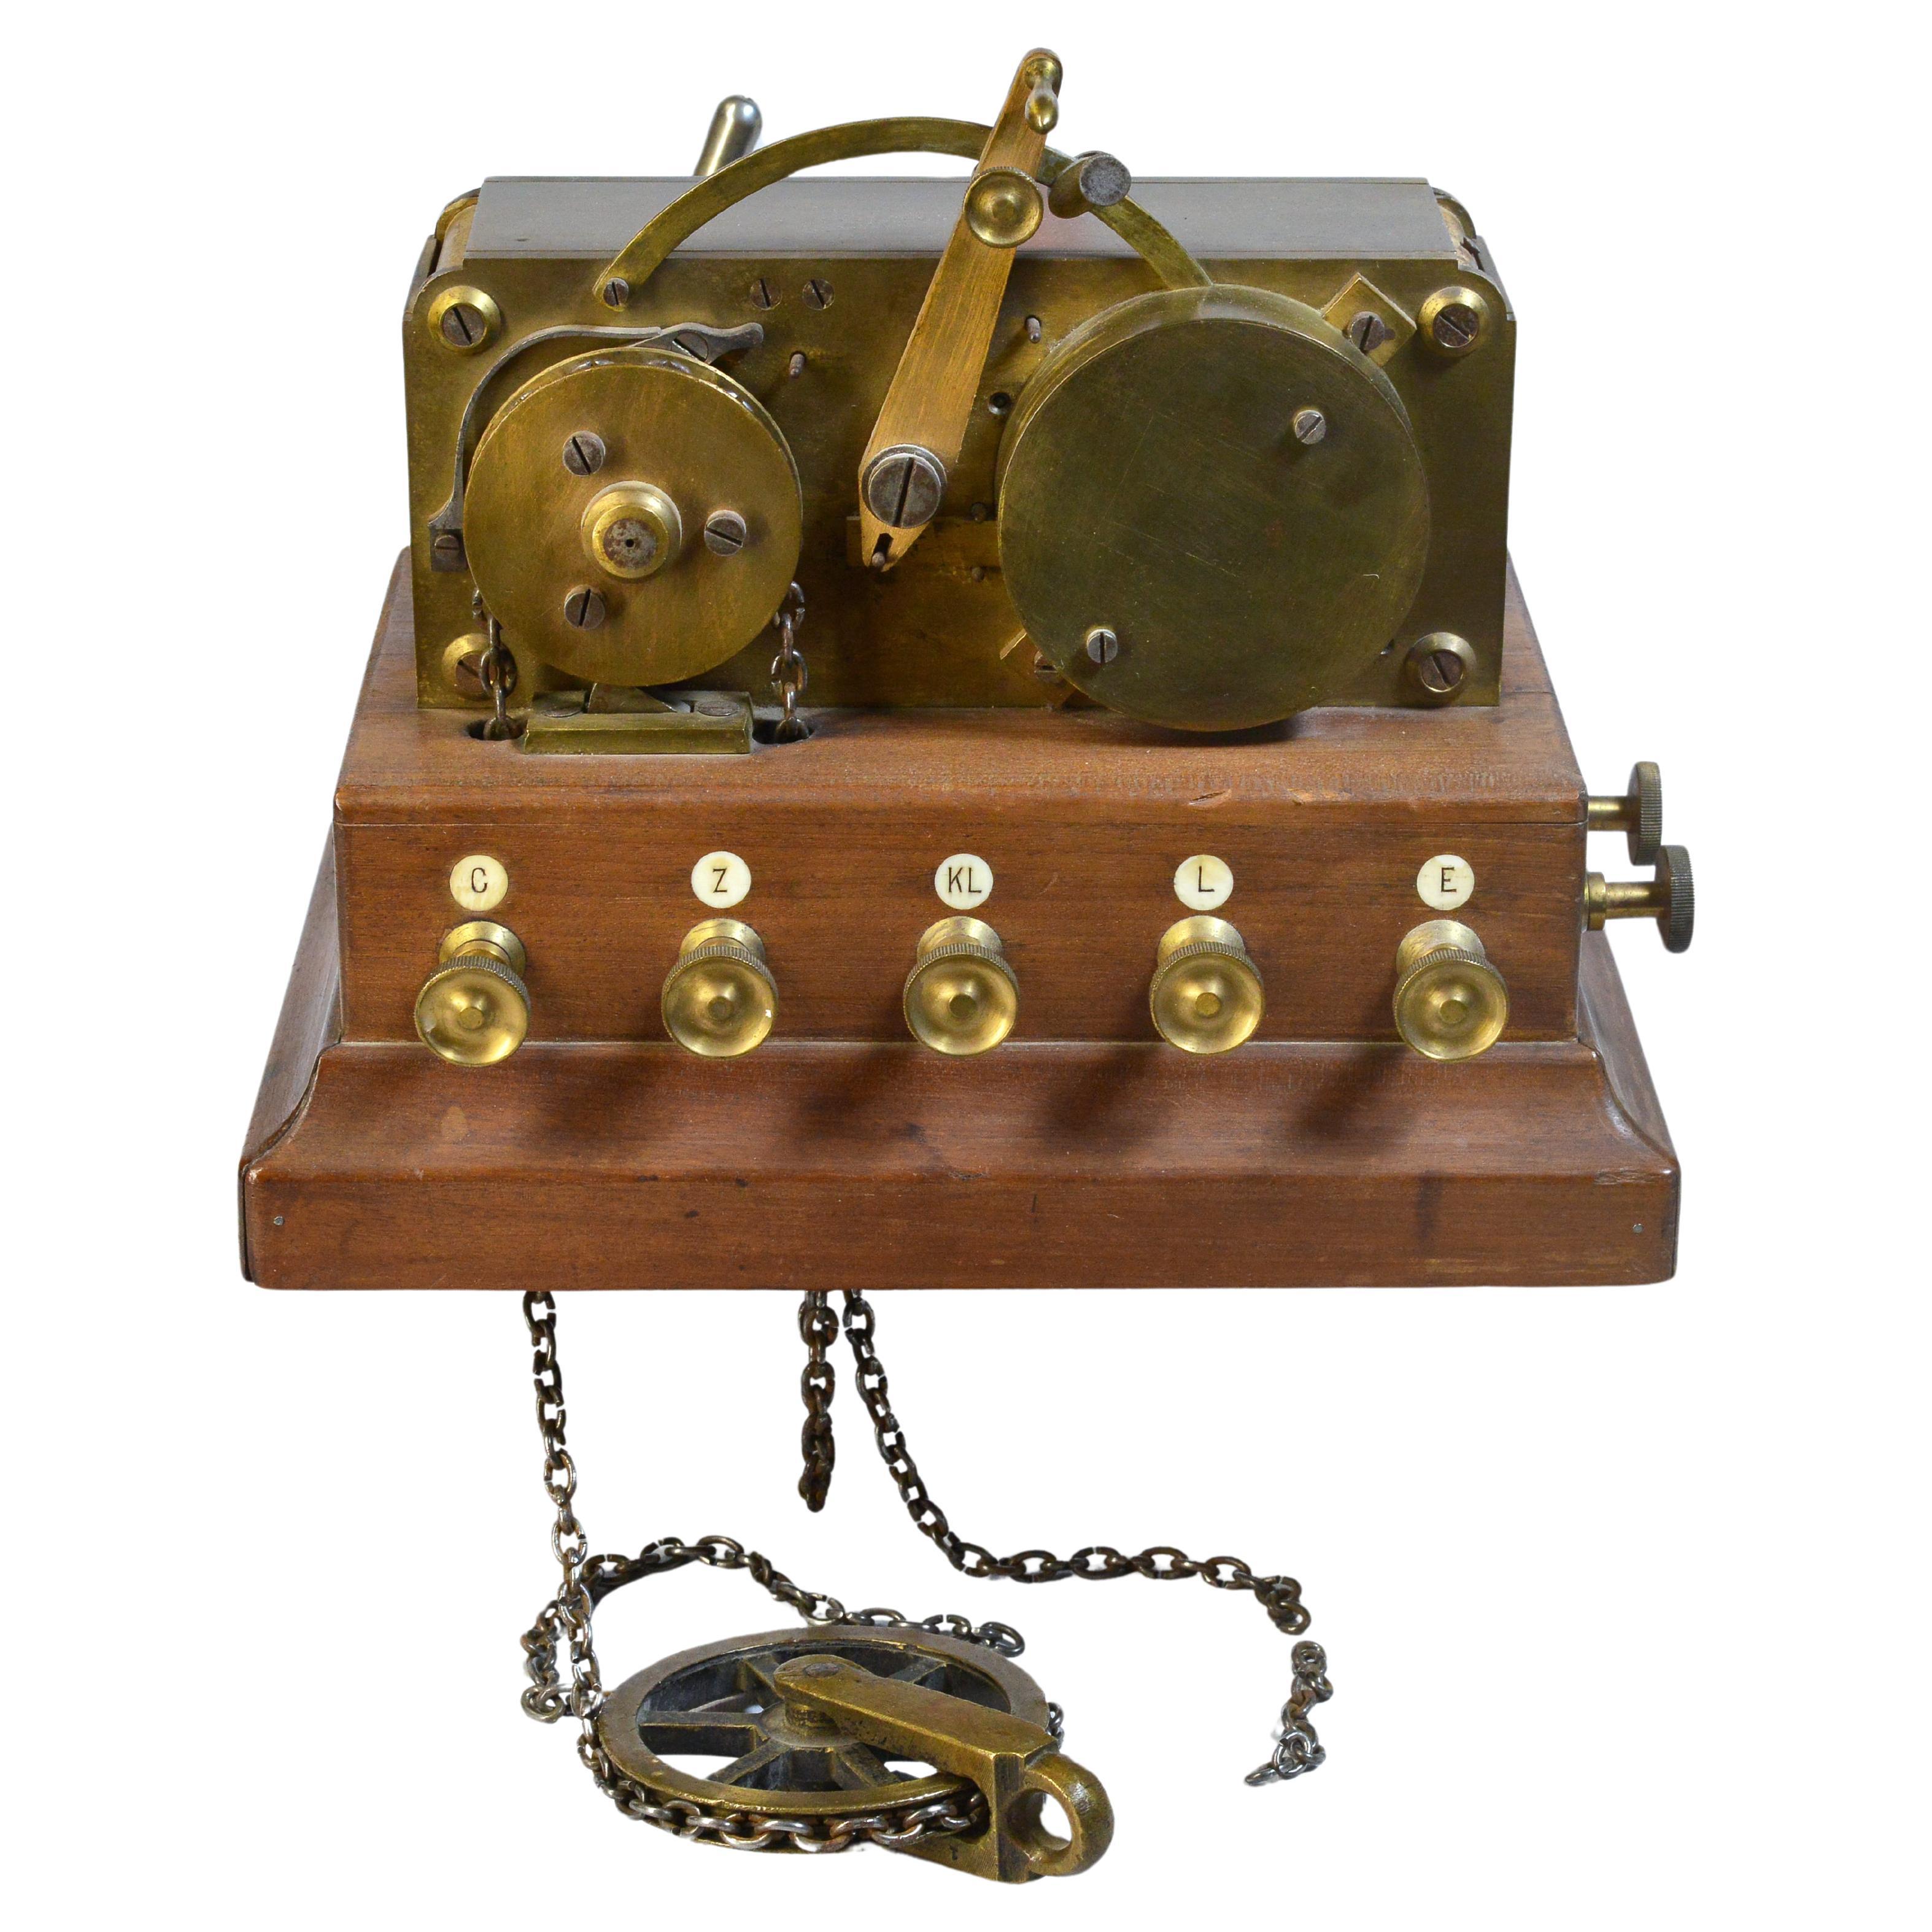 Antique Danish SNTS Morse Telegraph Register Wheatstone transmitter For Sale